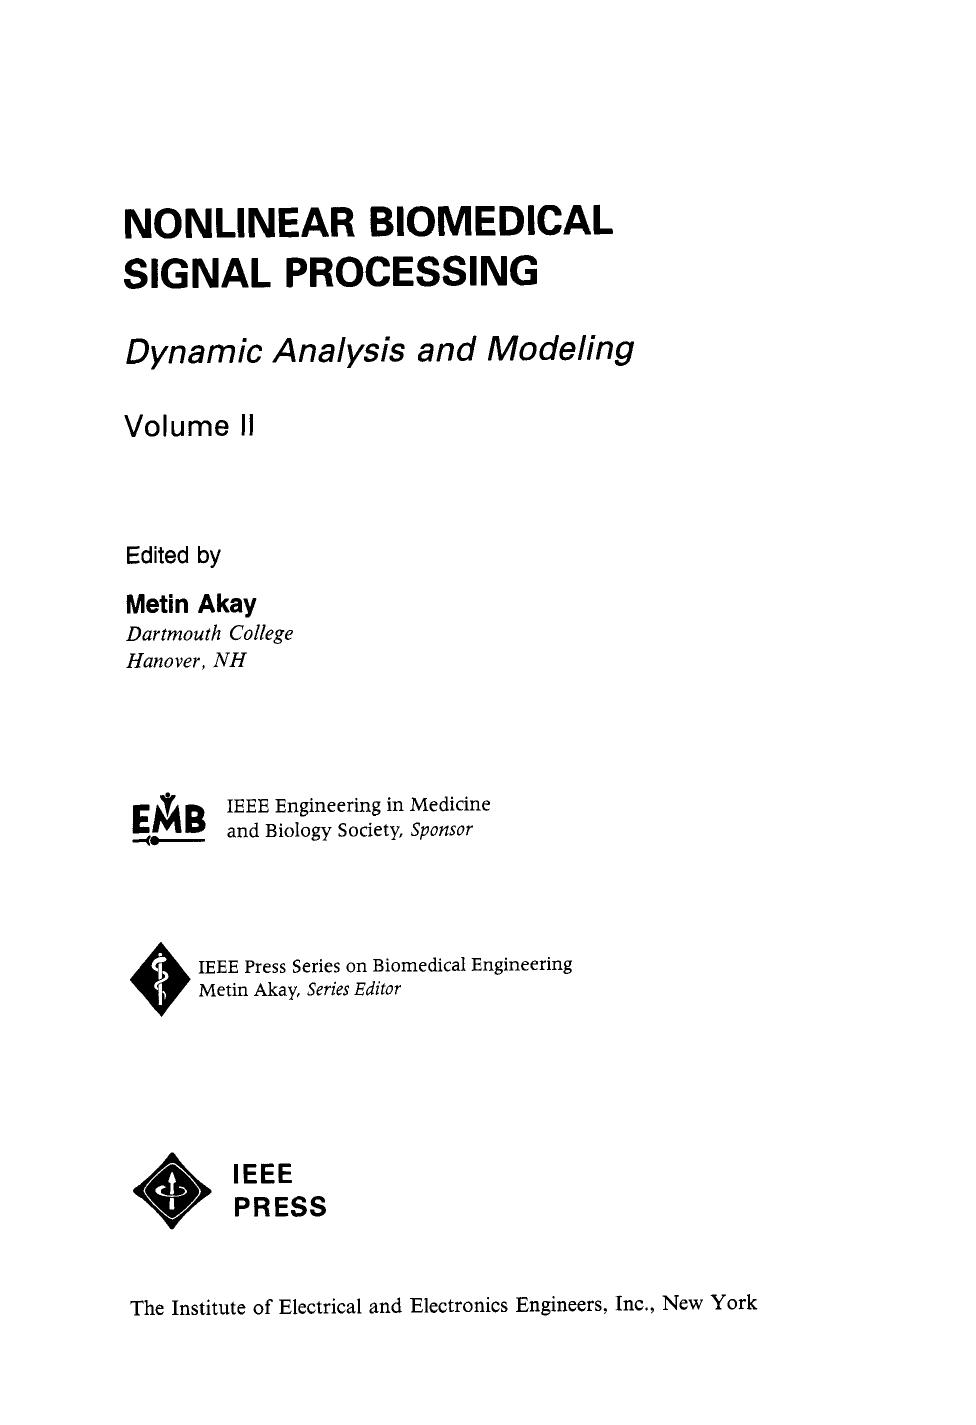 [Metin Akay] Nonlinear Biomedical Signal Processin(b-ok.org)